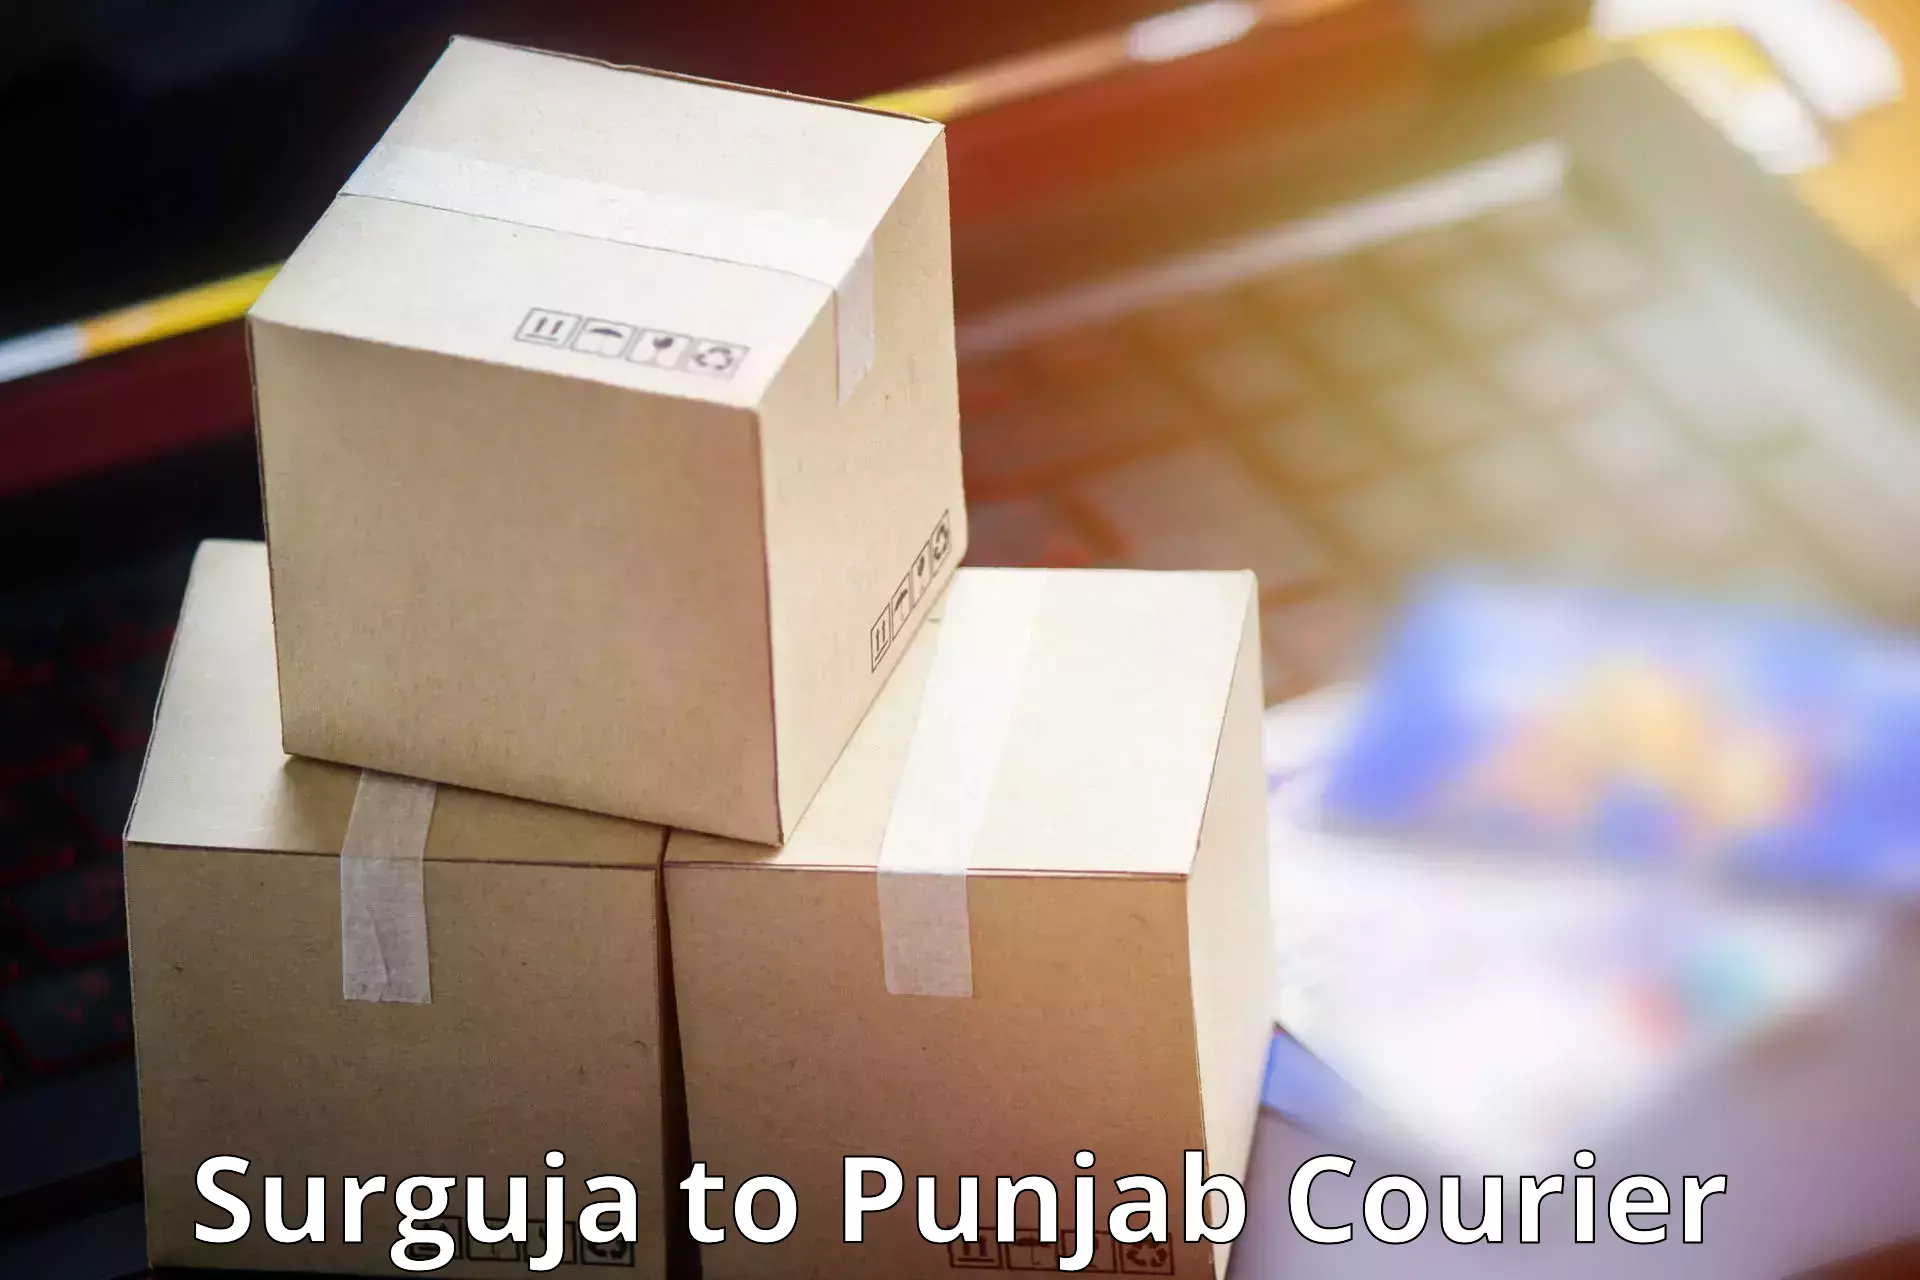 Professional parcel services Surguja to Kapurthala